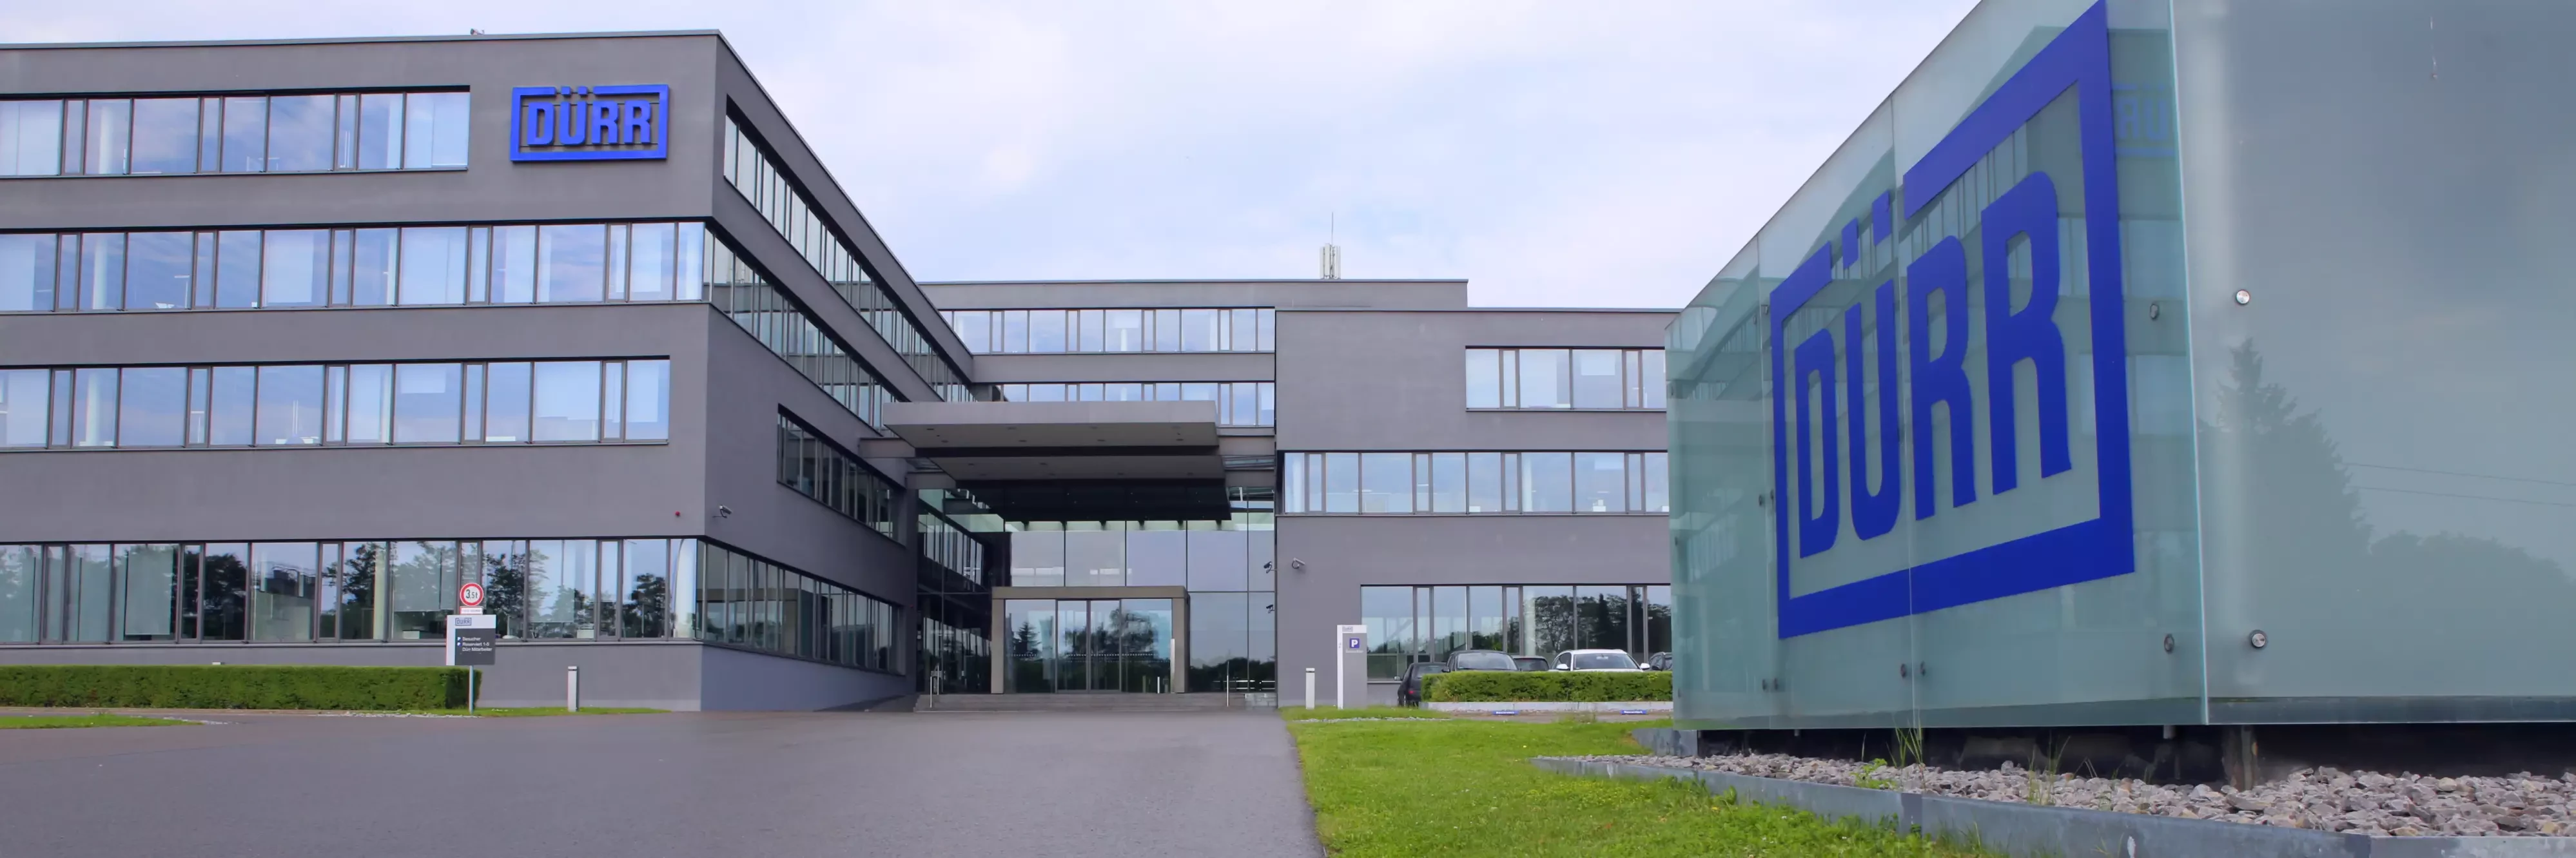 Dürr Headquarters Building front view in Bietigheim-Bissingen, Germany